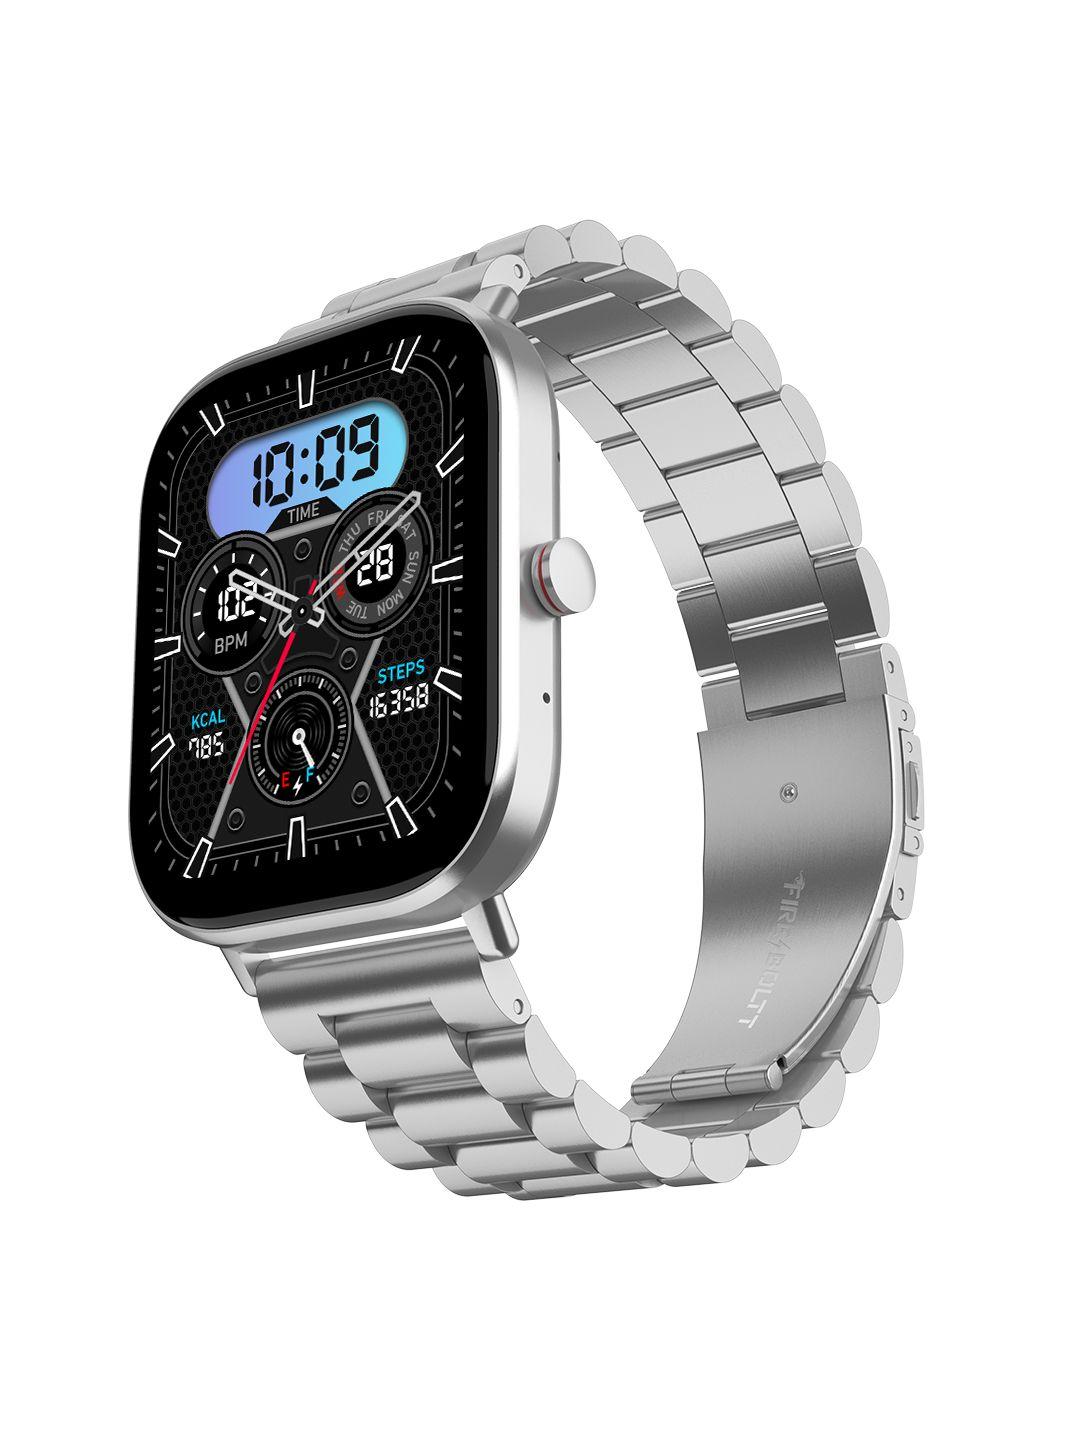 fire-boltt starlight 1.96" hd display luxury smartwatch with bluetooth calling